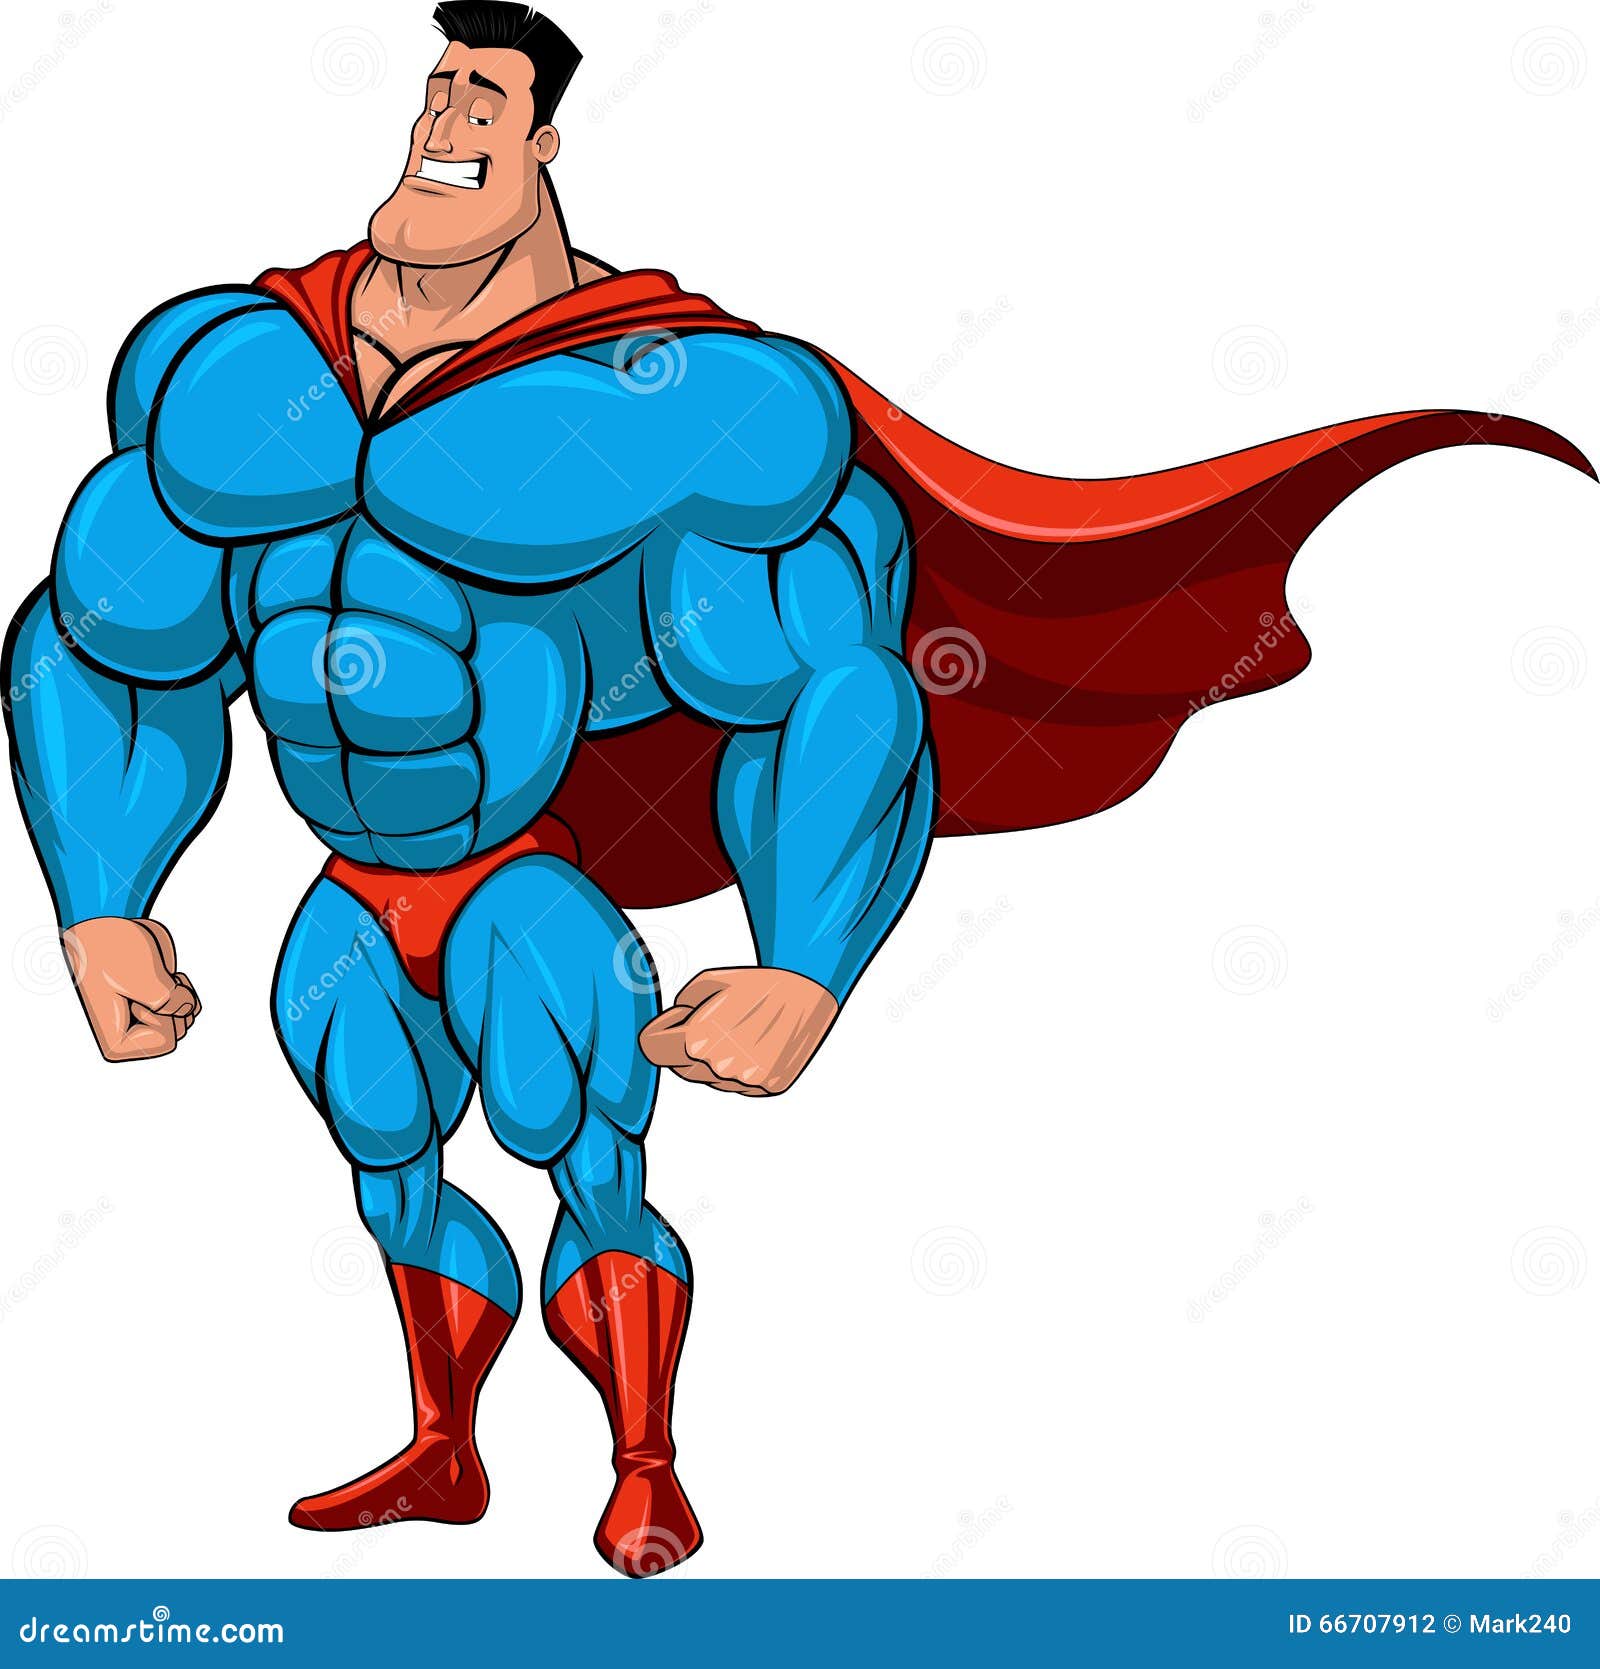 Man in a superhero costume stock vector. Illustration of crime - 66707912